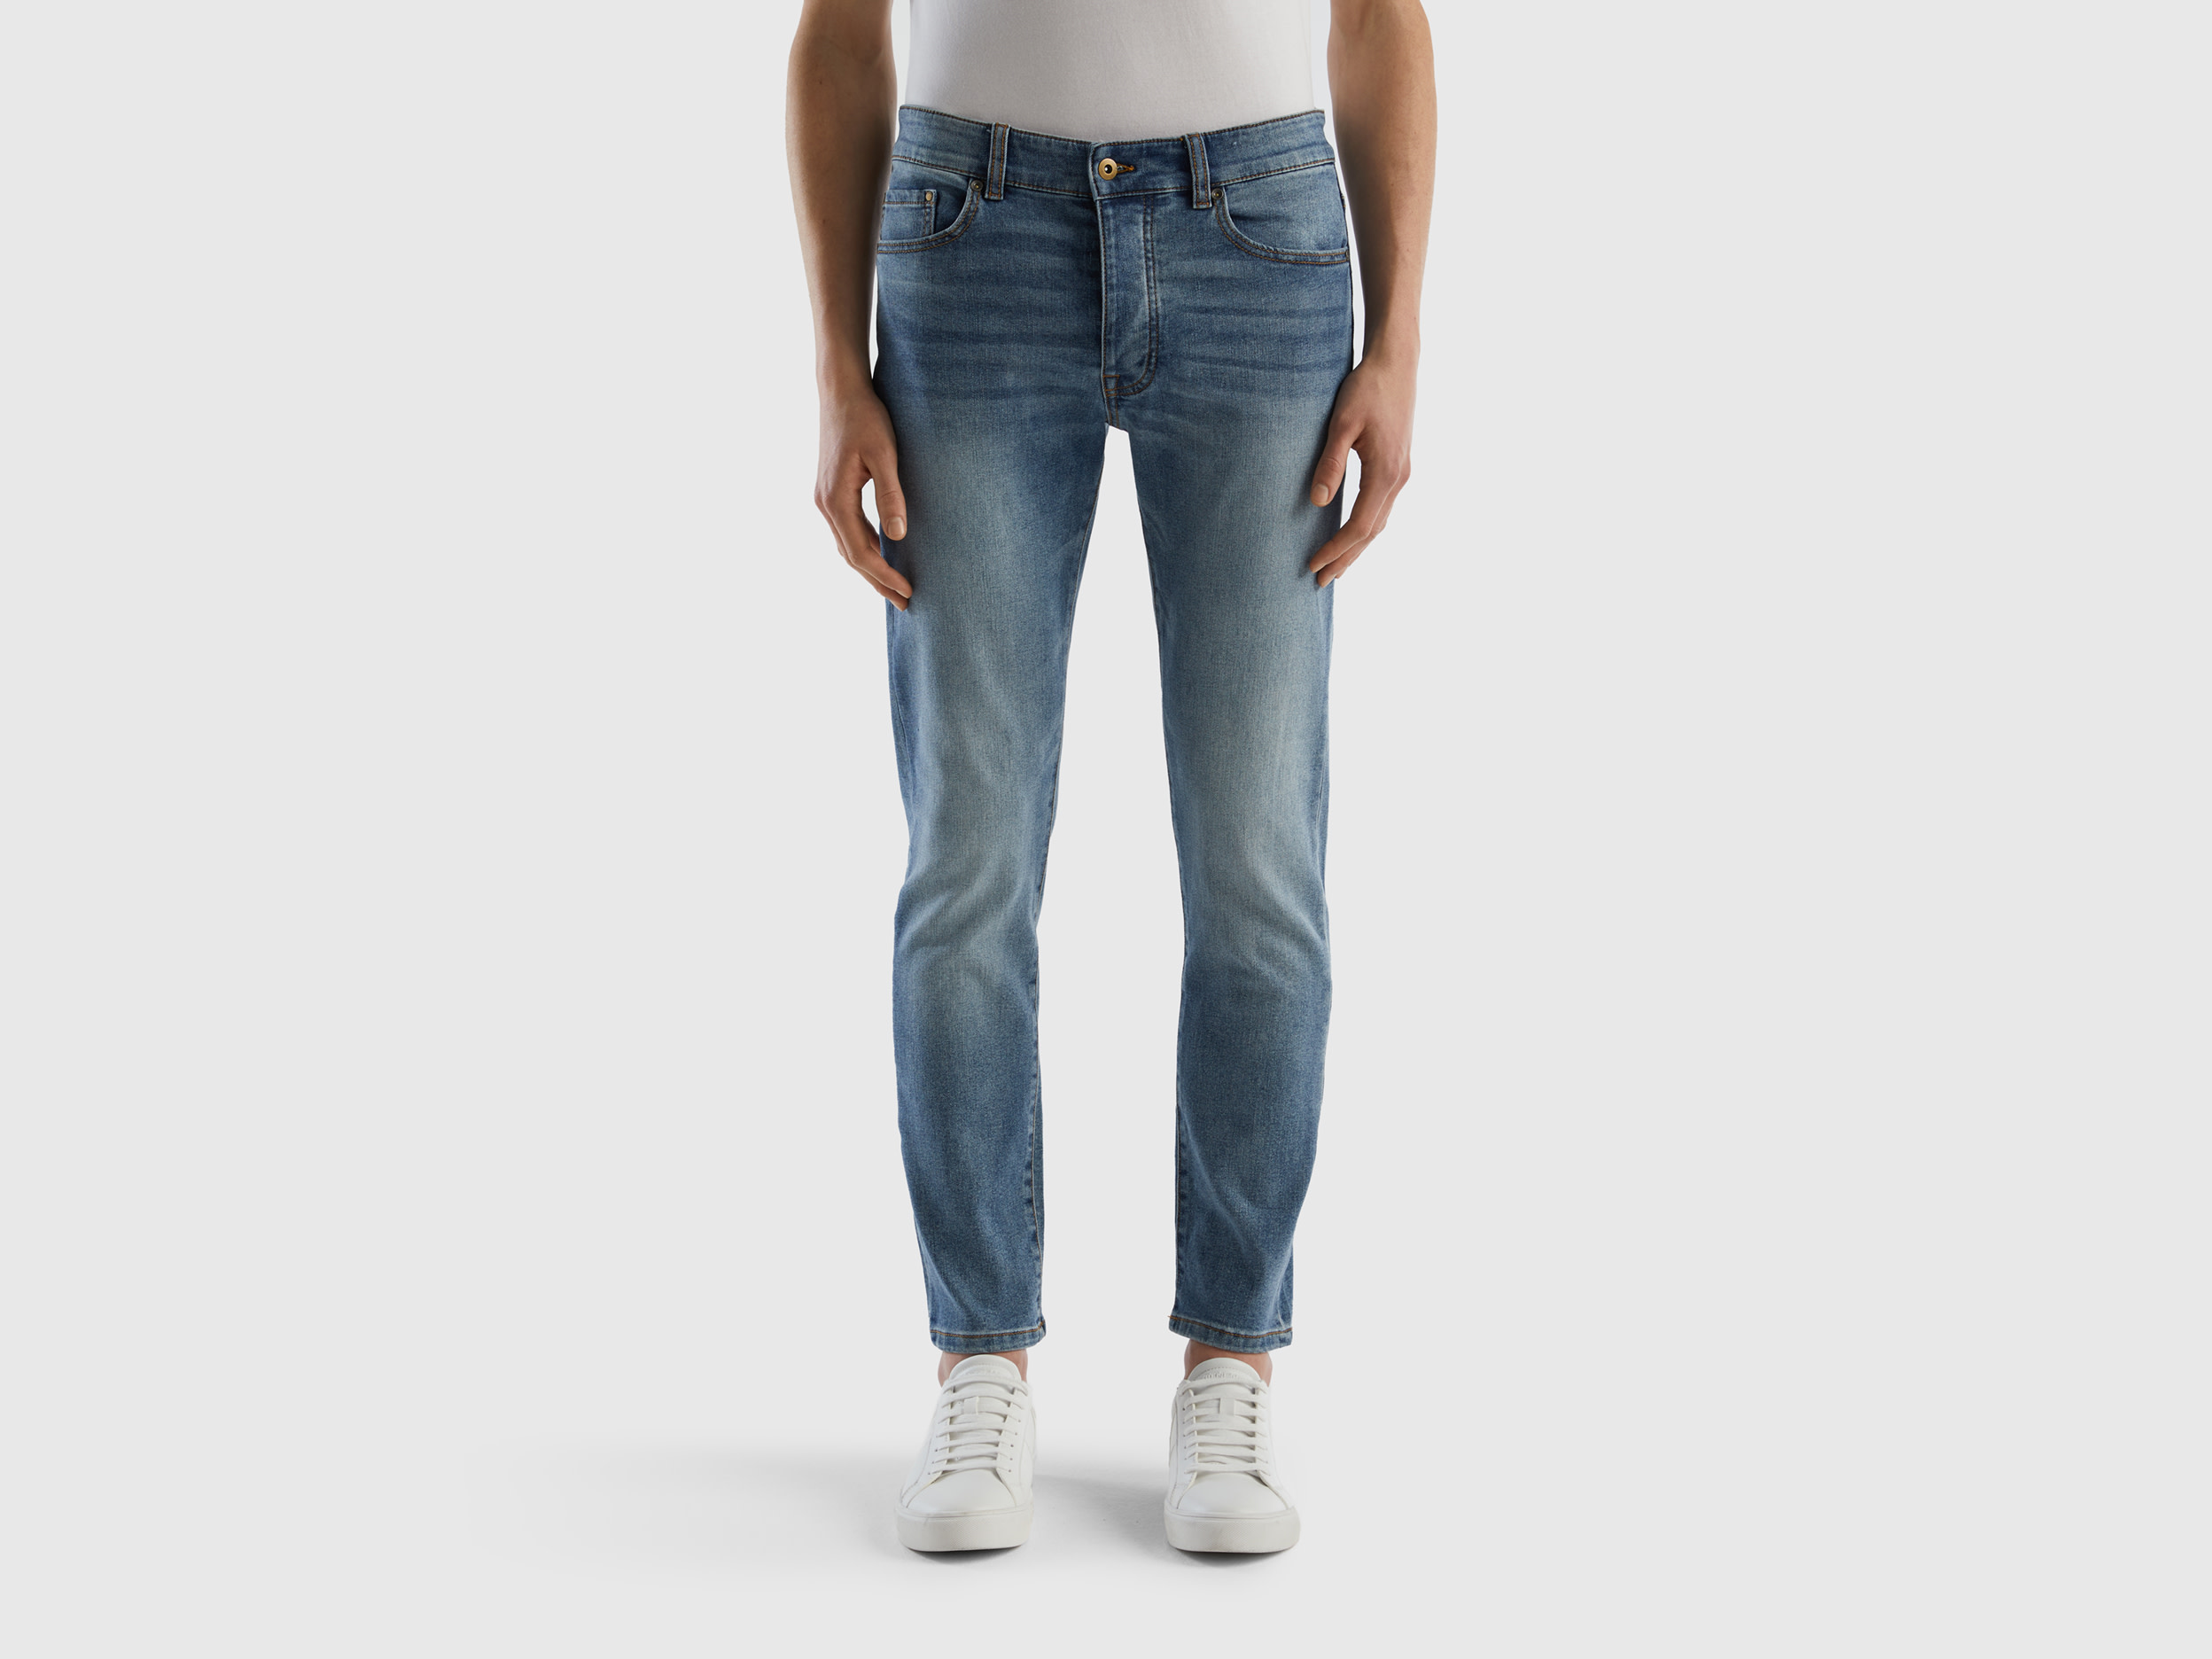 Benetton, Five Pocket Slim Fit Jeans, size 33, Light Blue, Men